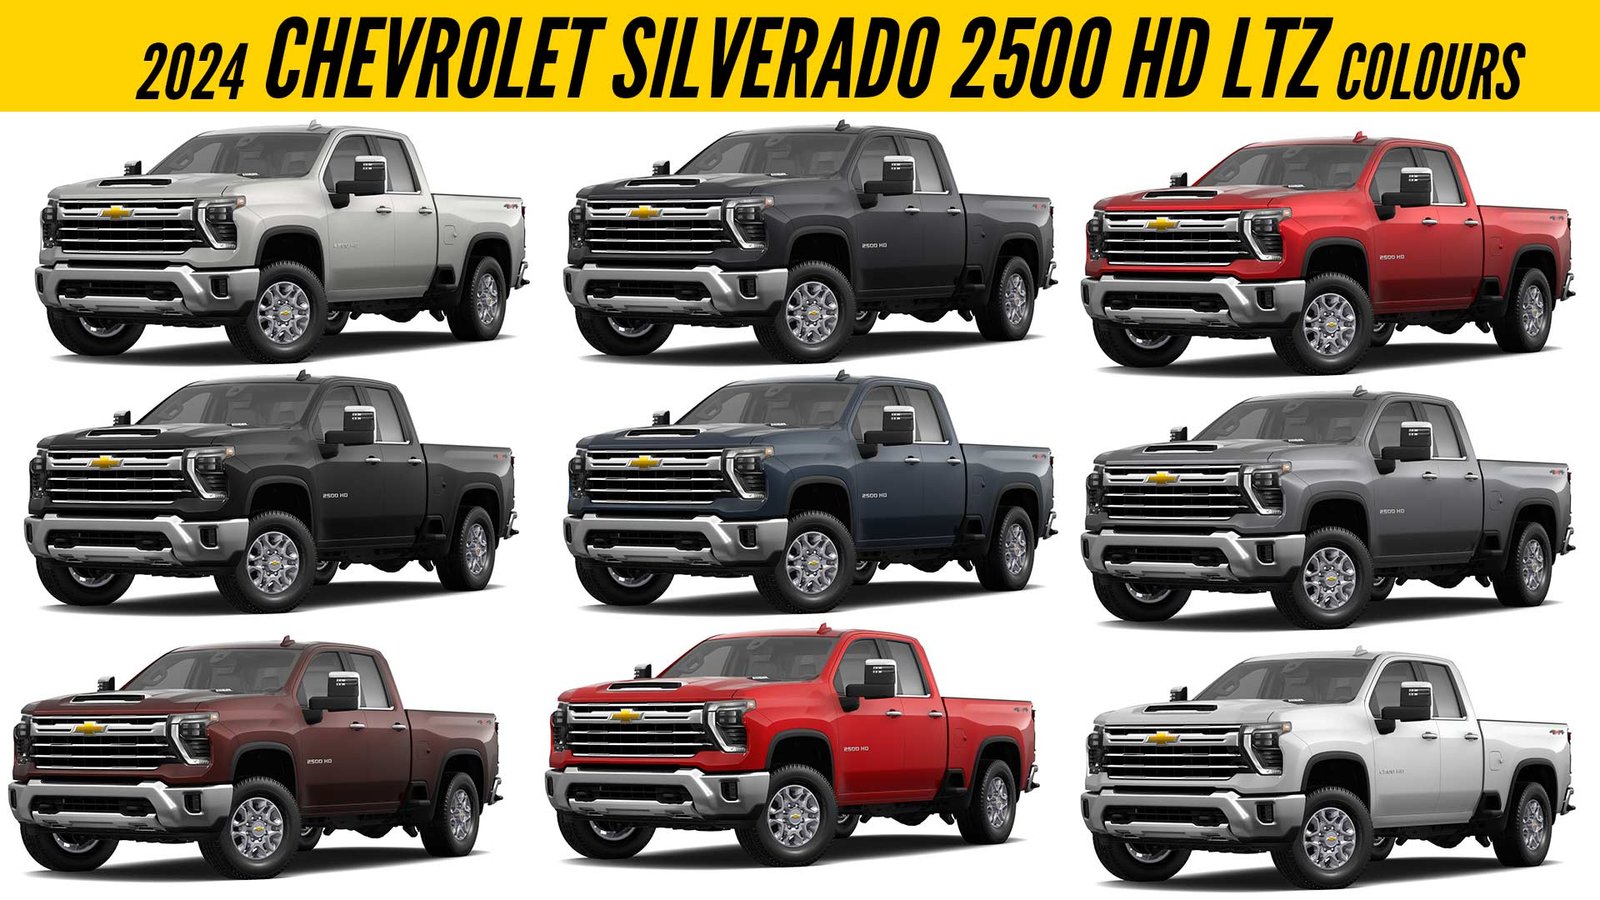 2024 Chevrolet Silverado 2500 HD LTZ All Color Options Images